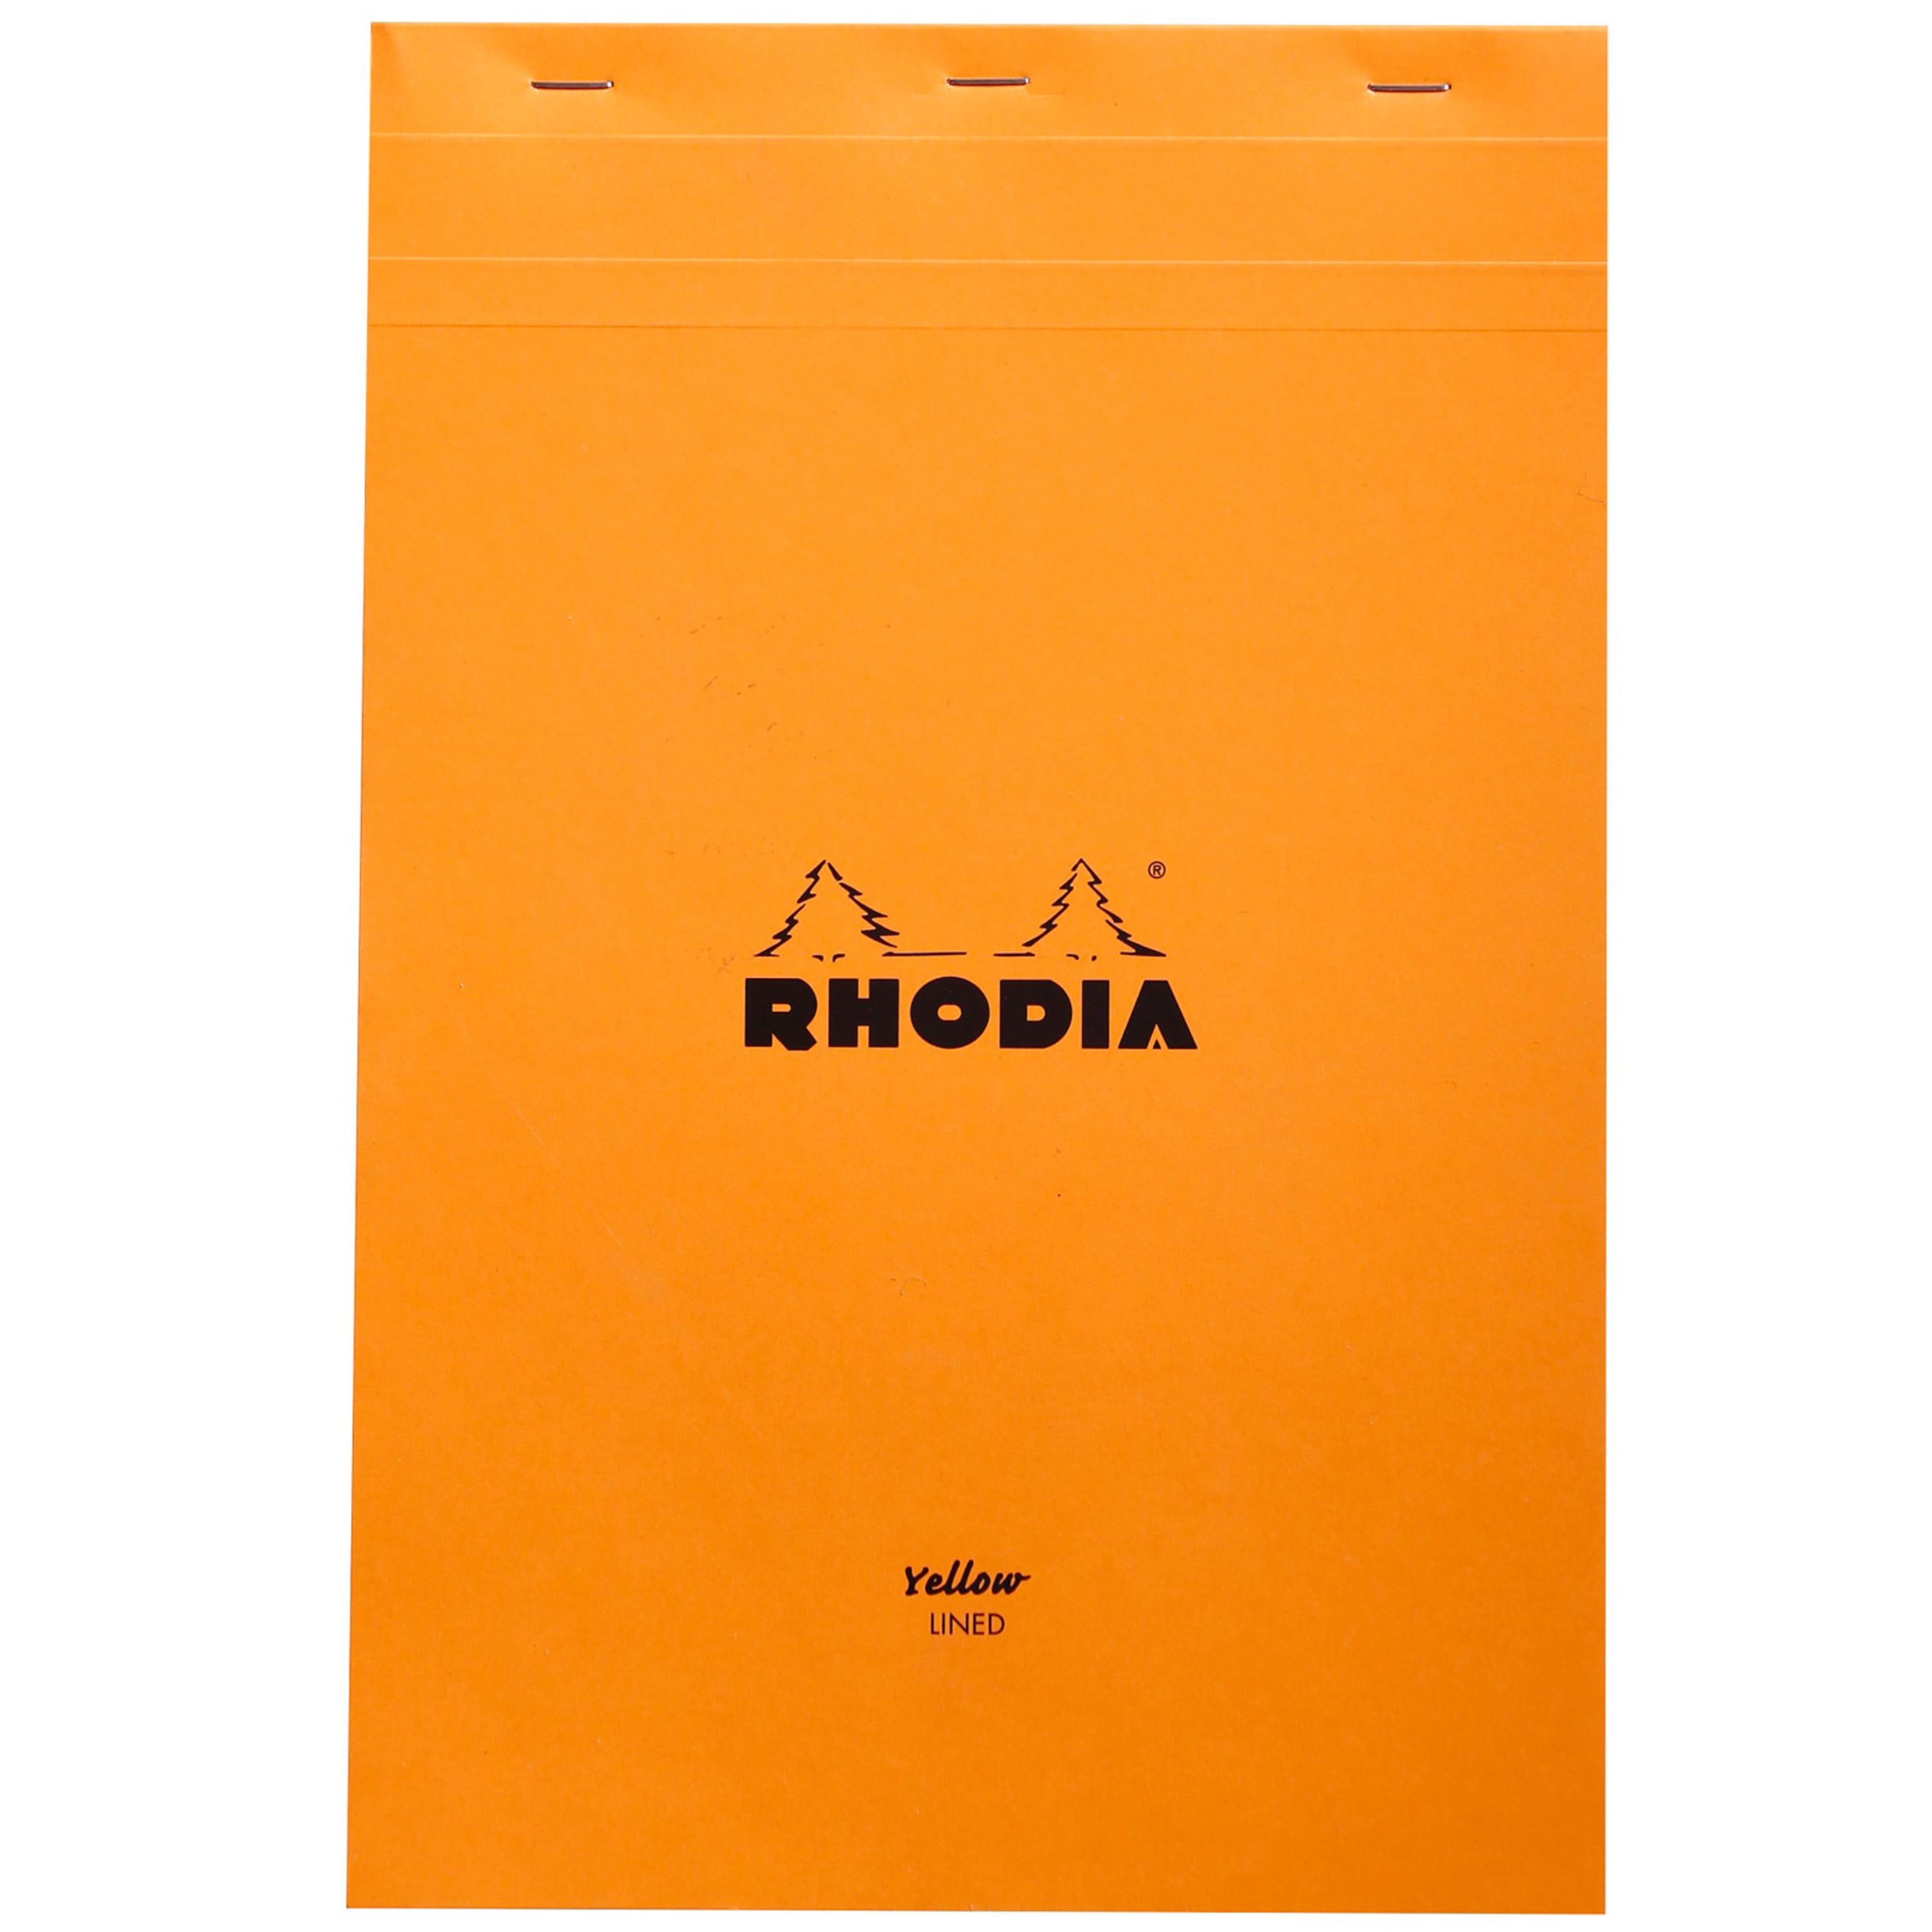 Rhodia Pad 8 25 X 12 5 Lined Orange